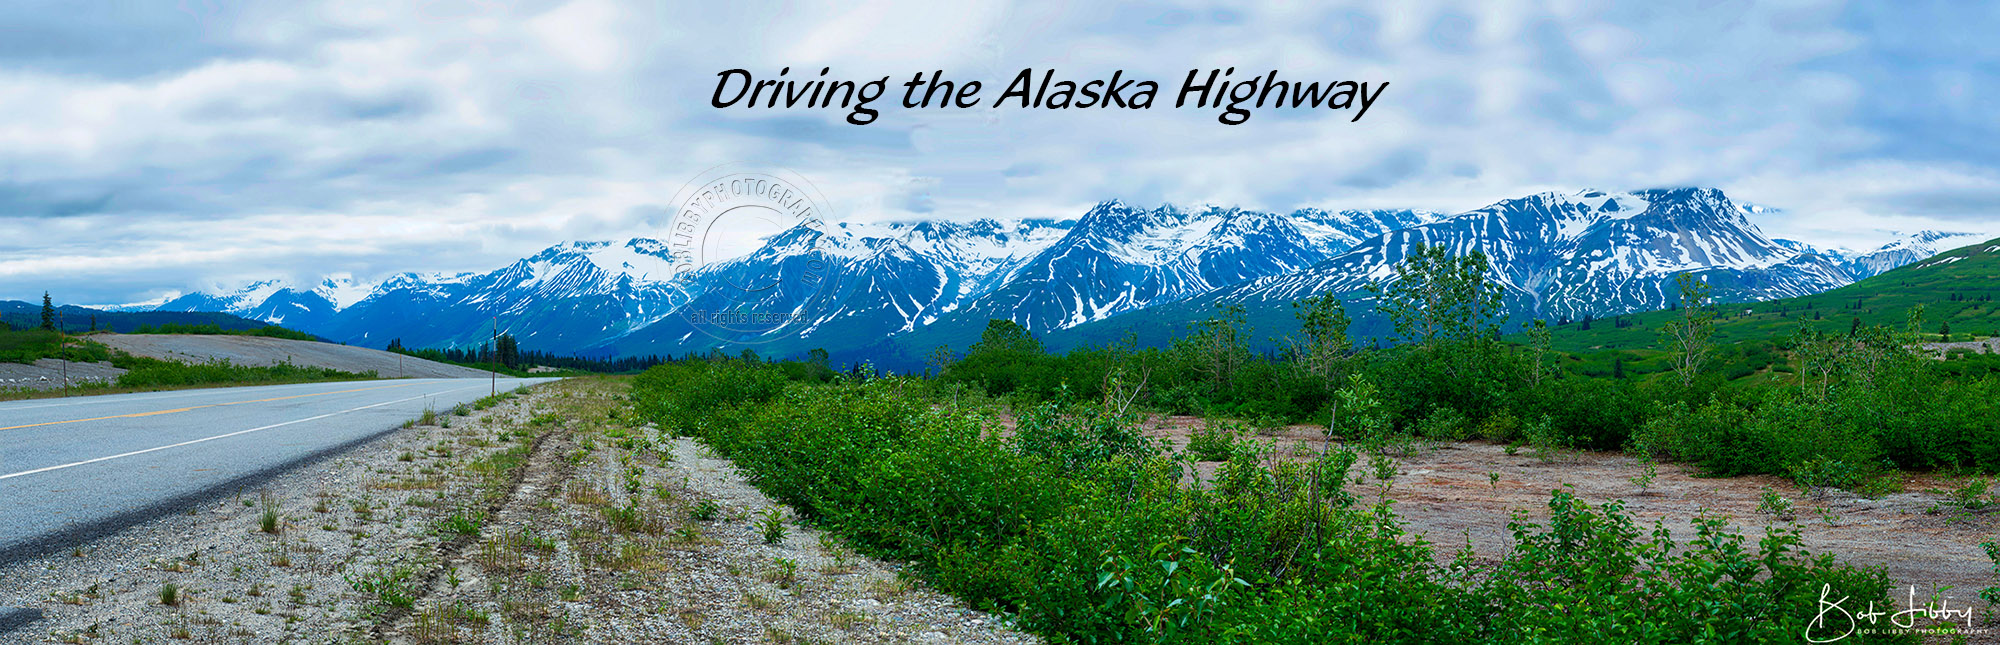 Driving the Alaska Highway